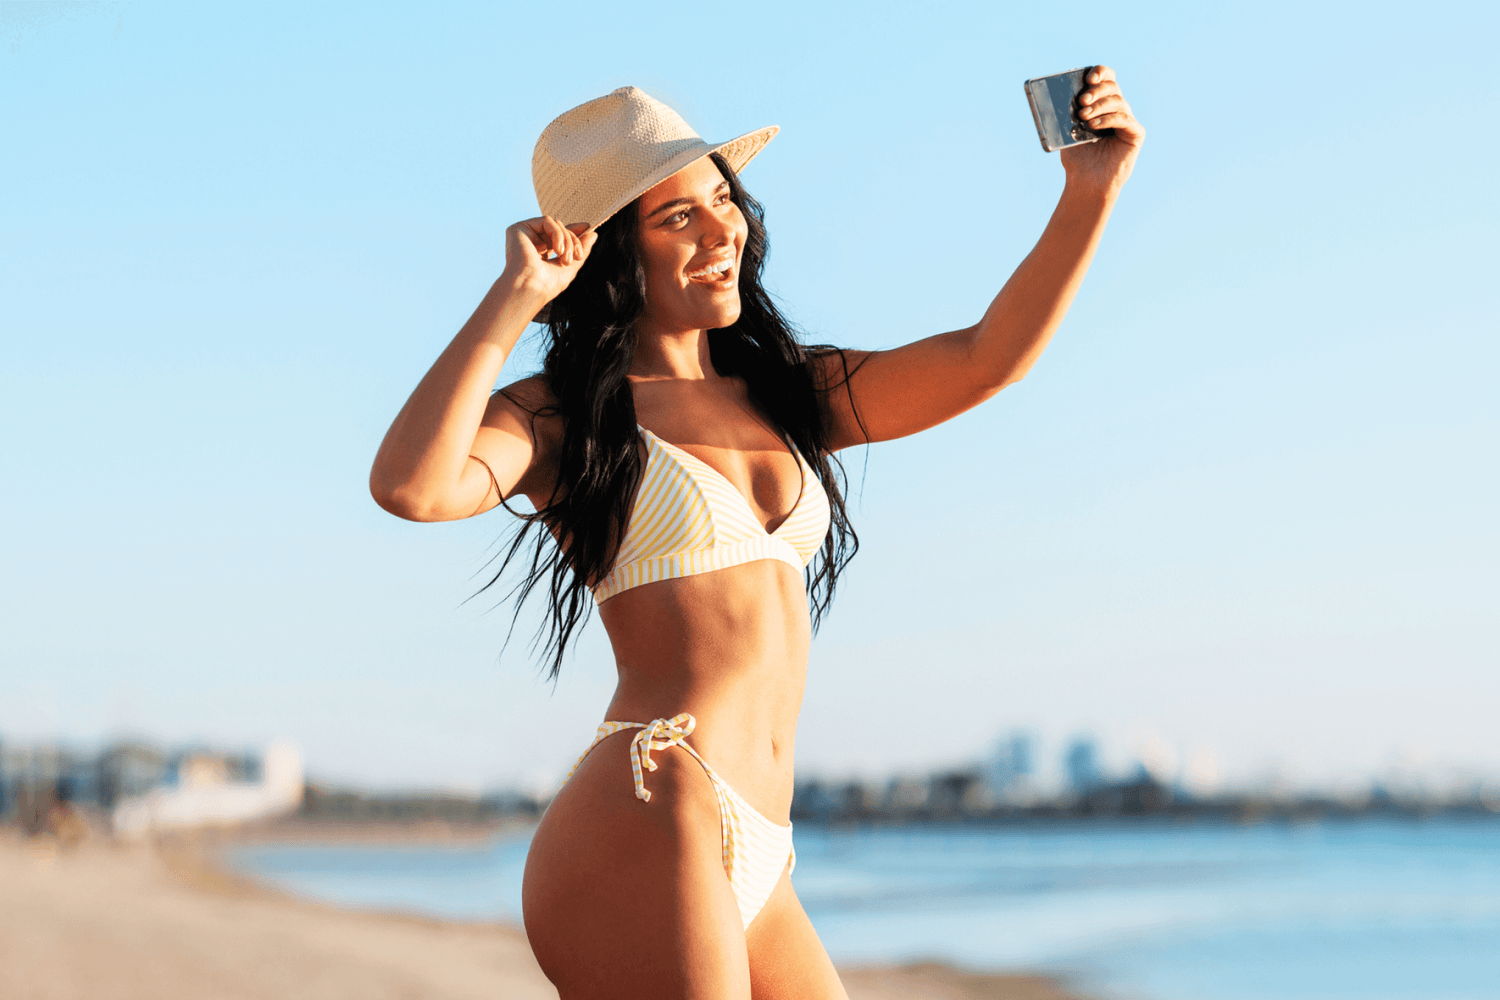 Joyful woman taking a beach selfie after Brazilian IPL hair removal.